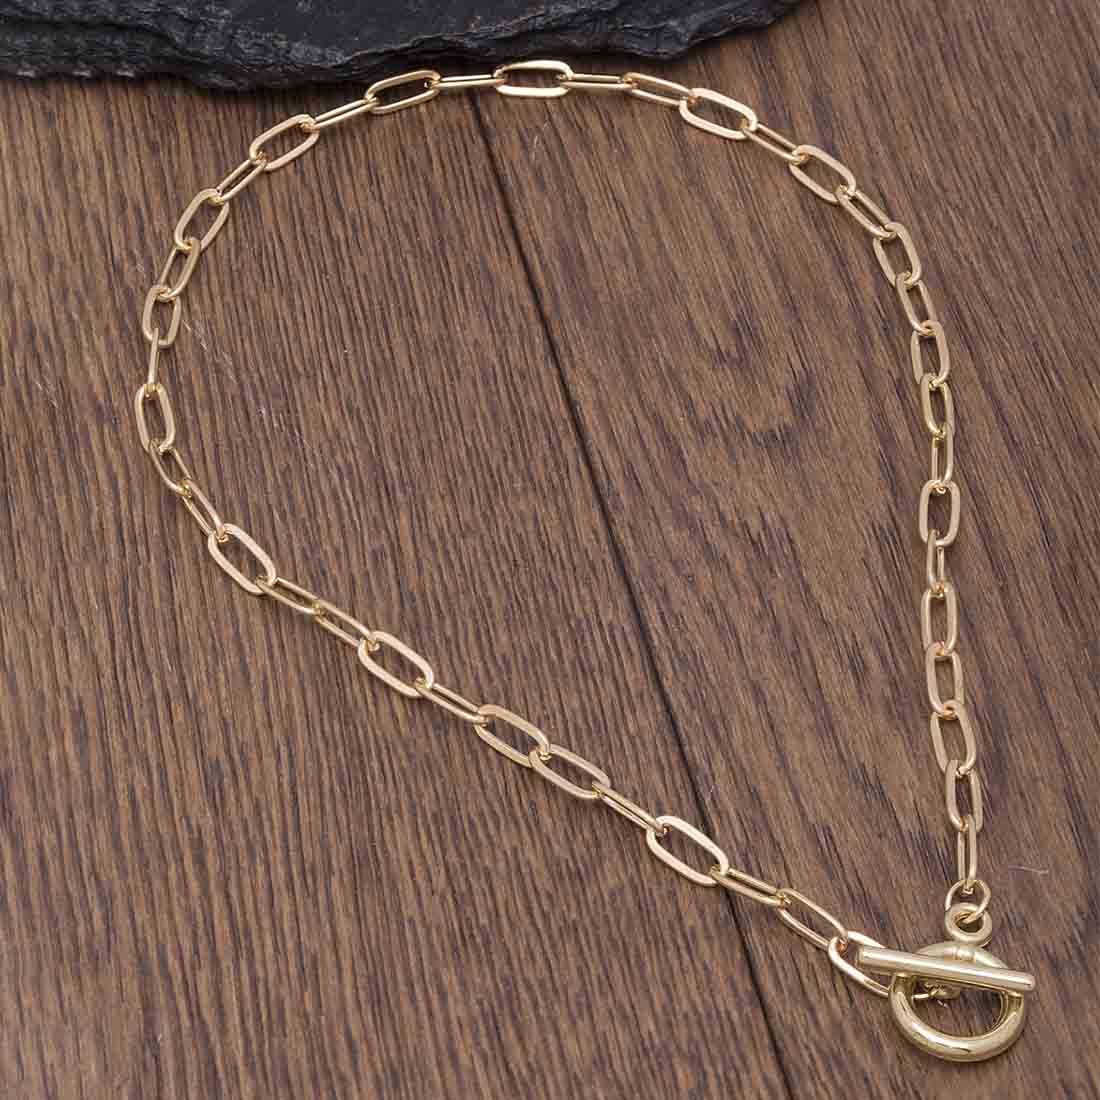 Ferosh Ring Chain Necklace